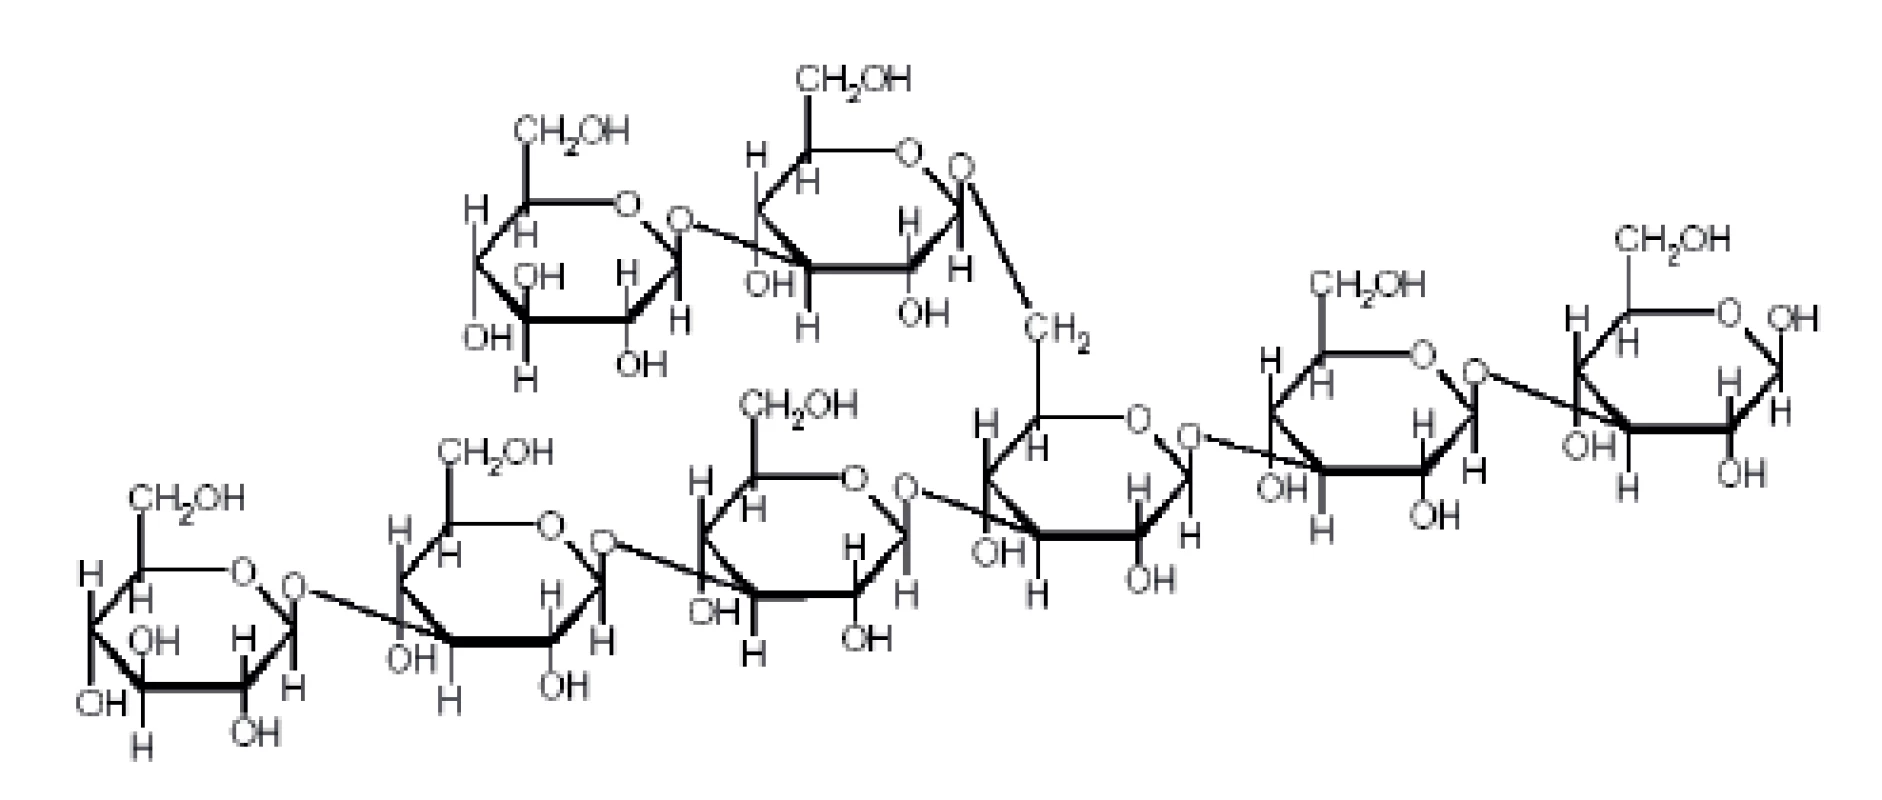 Struktura 1--&gt;3,1--&gt;6-β-glukanu (upraveno dle citace (32))